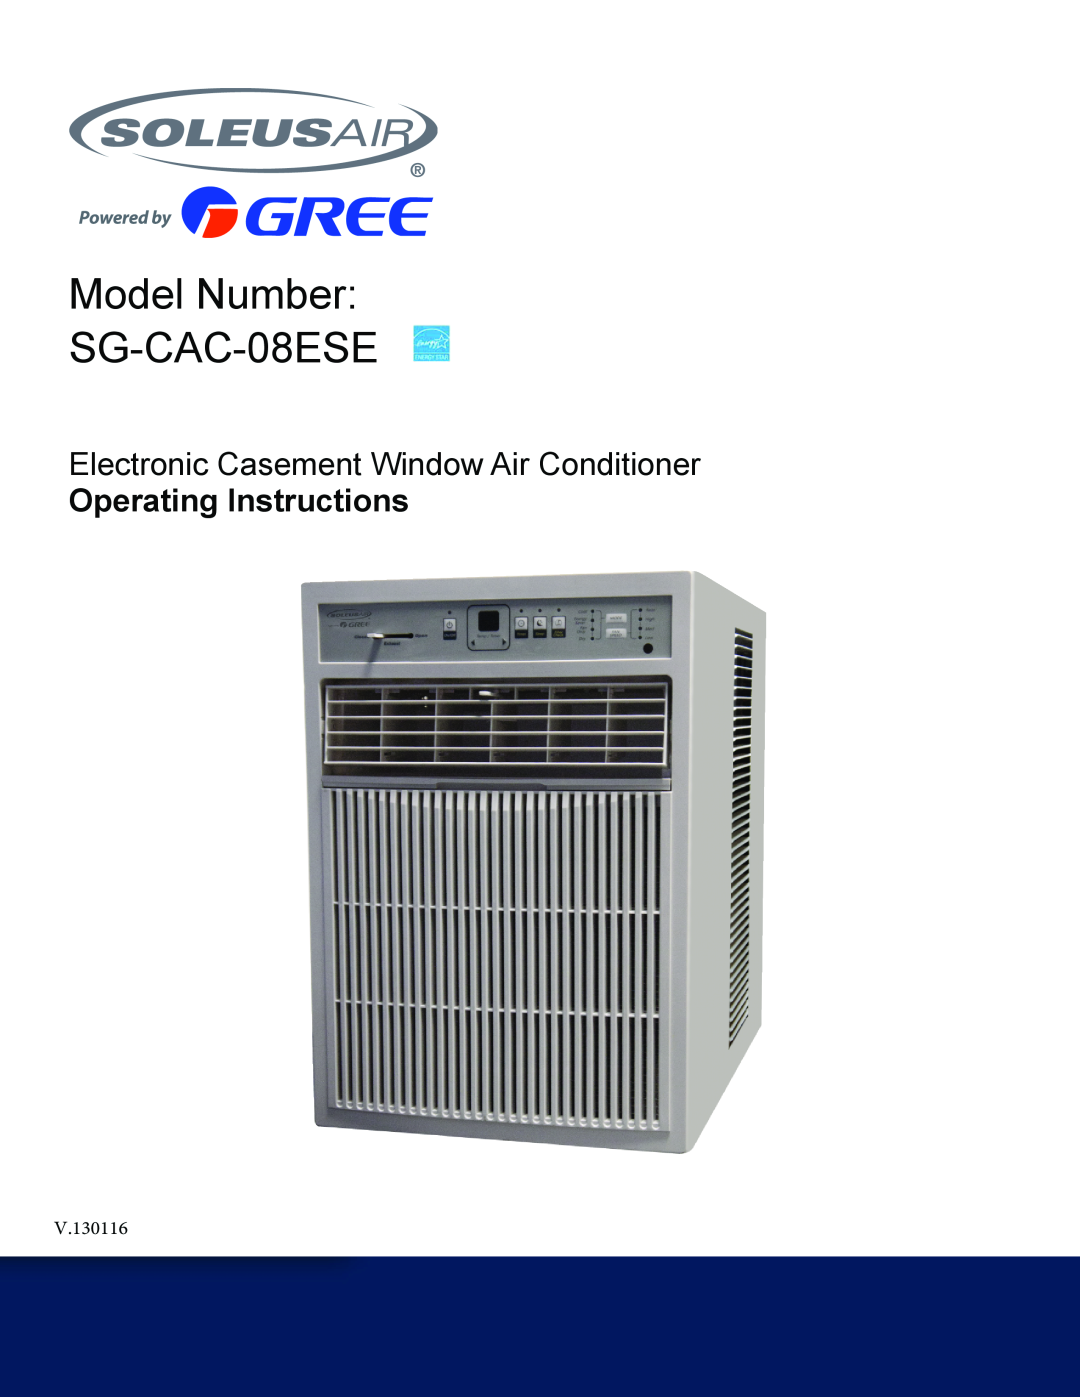 Soleus Air manual Model SG-CAC-08ESE SG-CAC-10SE SG-CAC-12SE, Electronic Casement Window Air Conditioner 